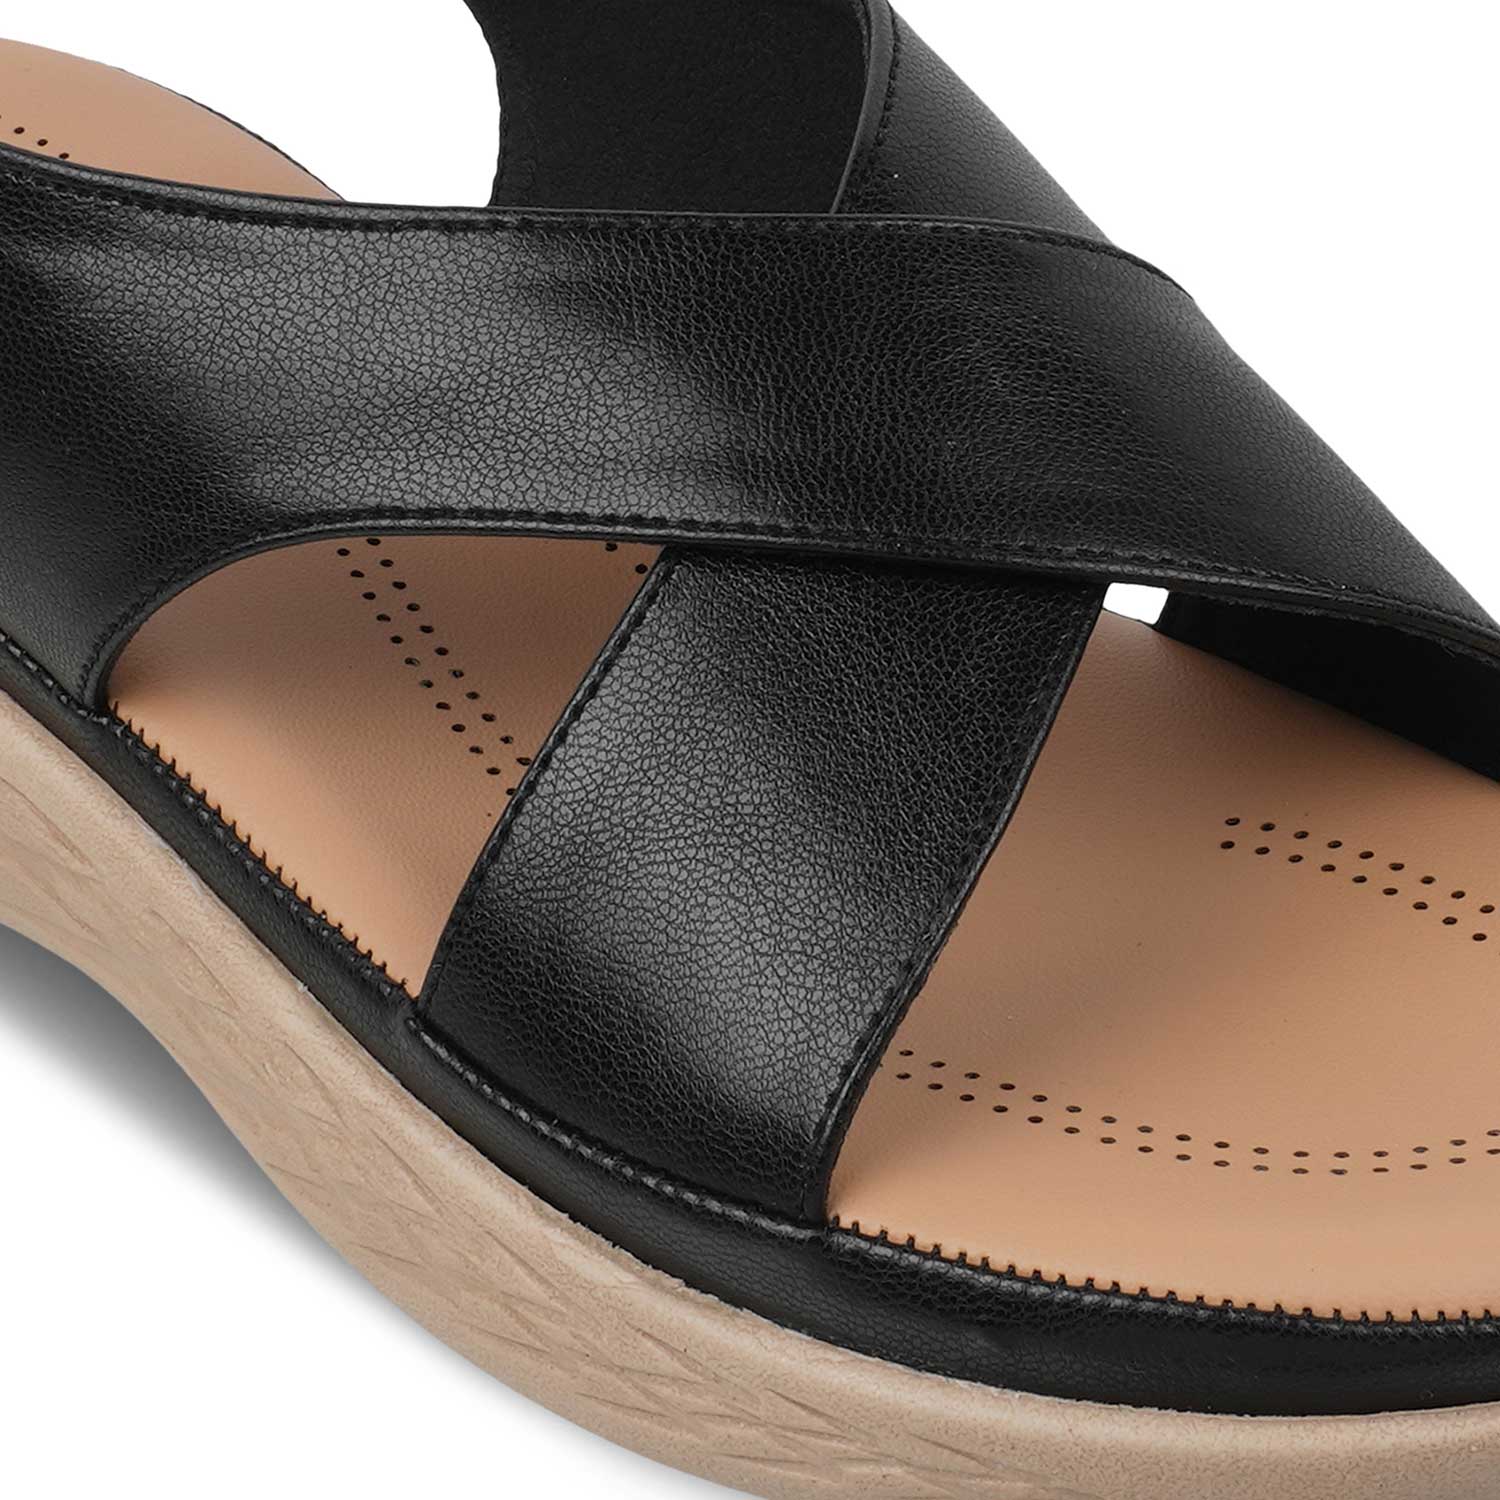 The Havit Black Women's Casual Wedge Sandals Tresmode